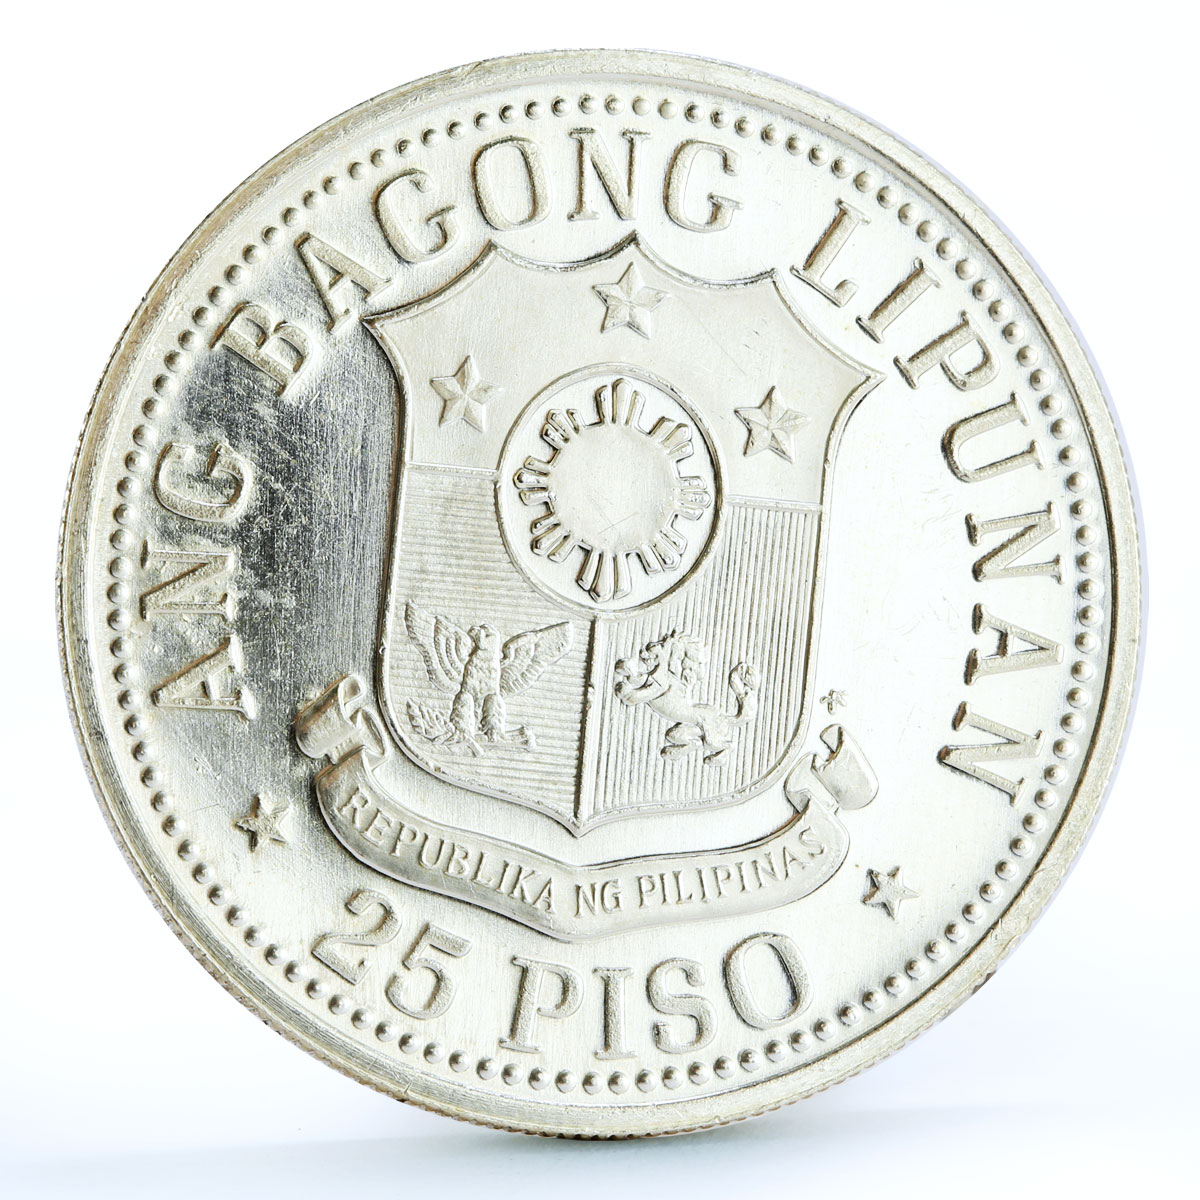 Philippines 25 piso 1st President Emilio Aquinaldo proof silver coin 1975